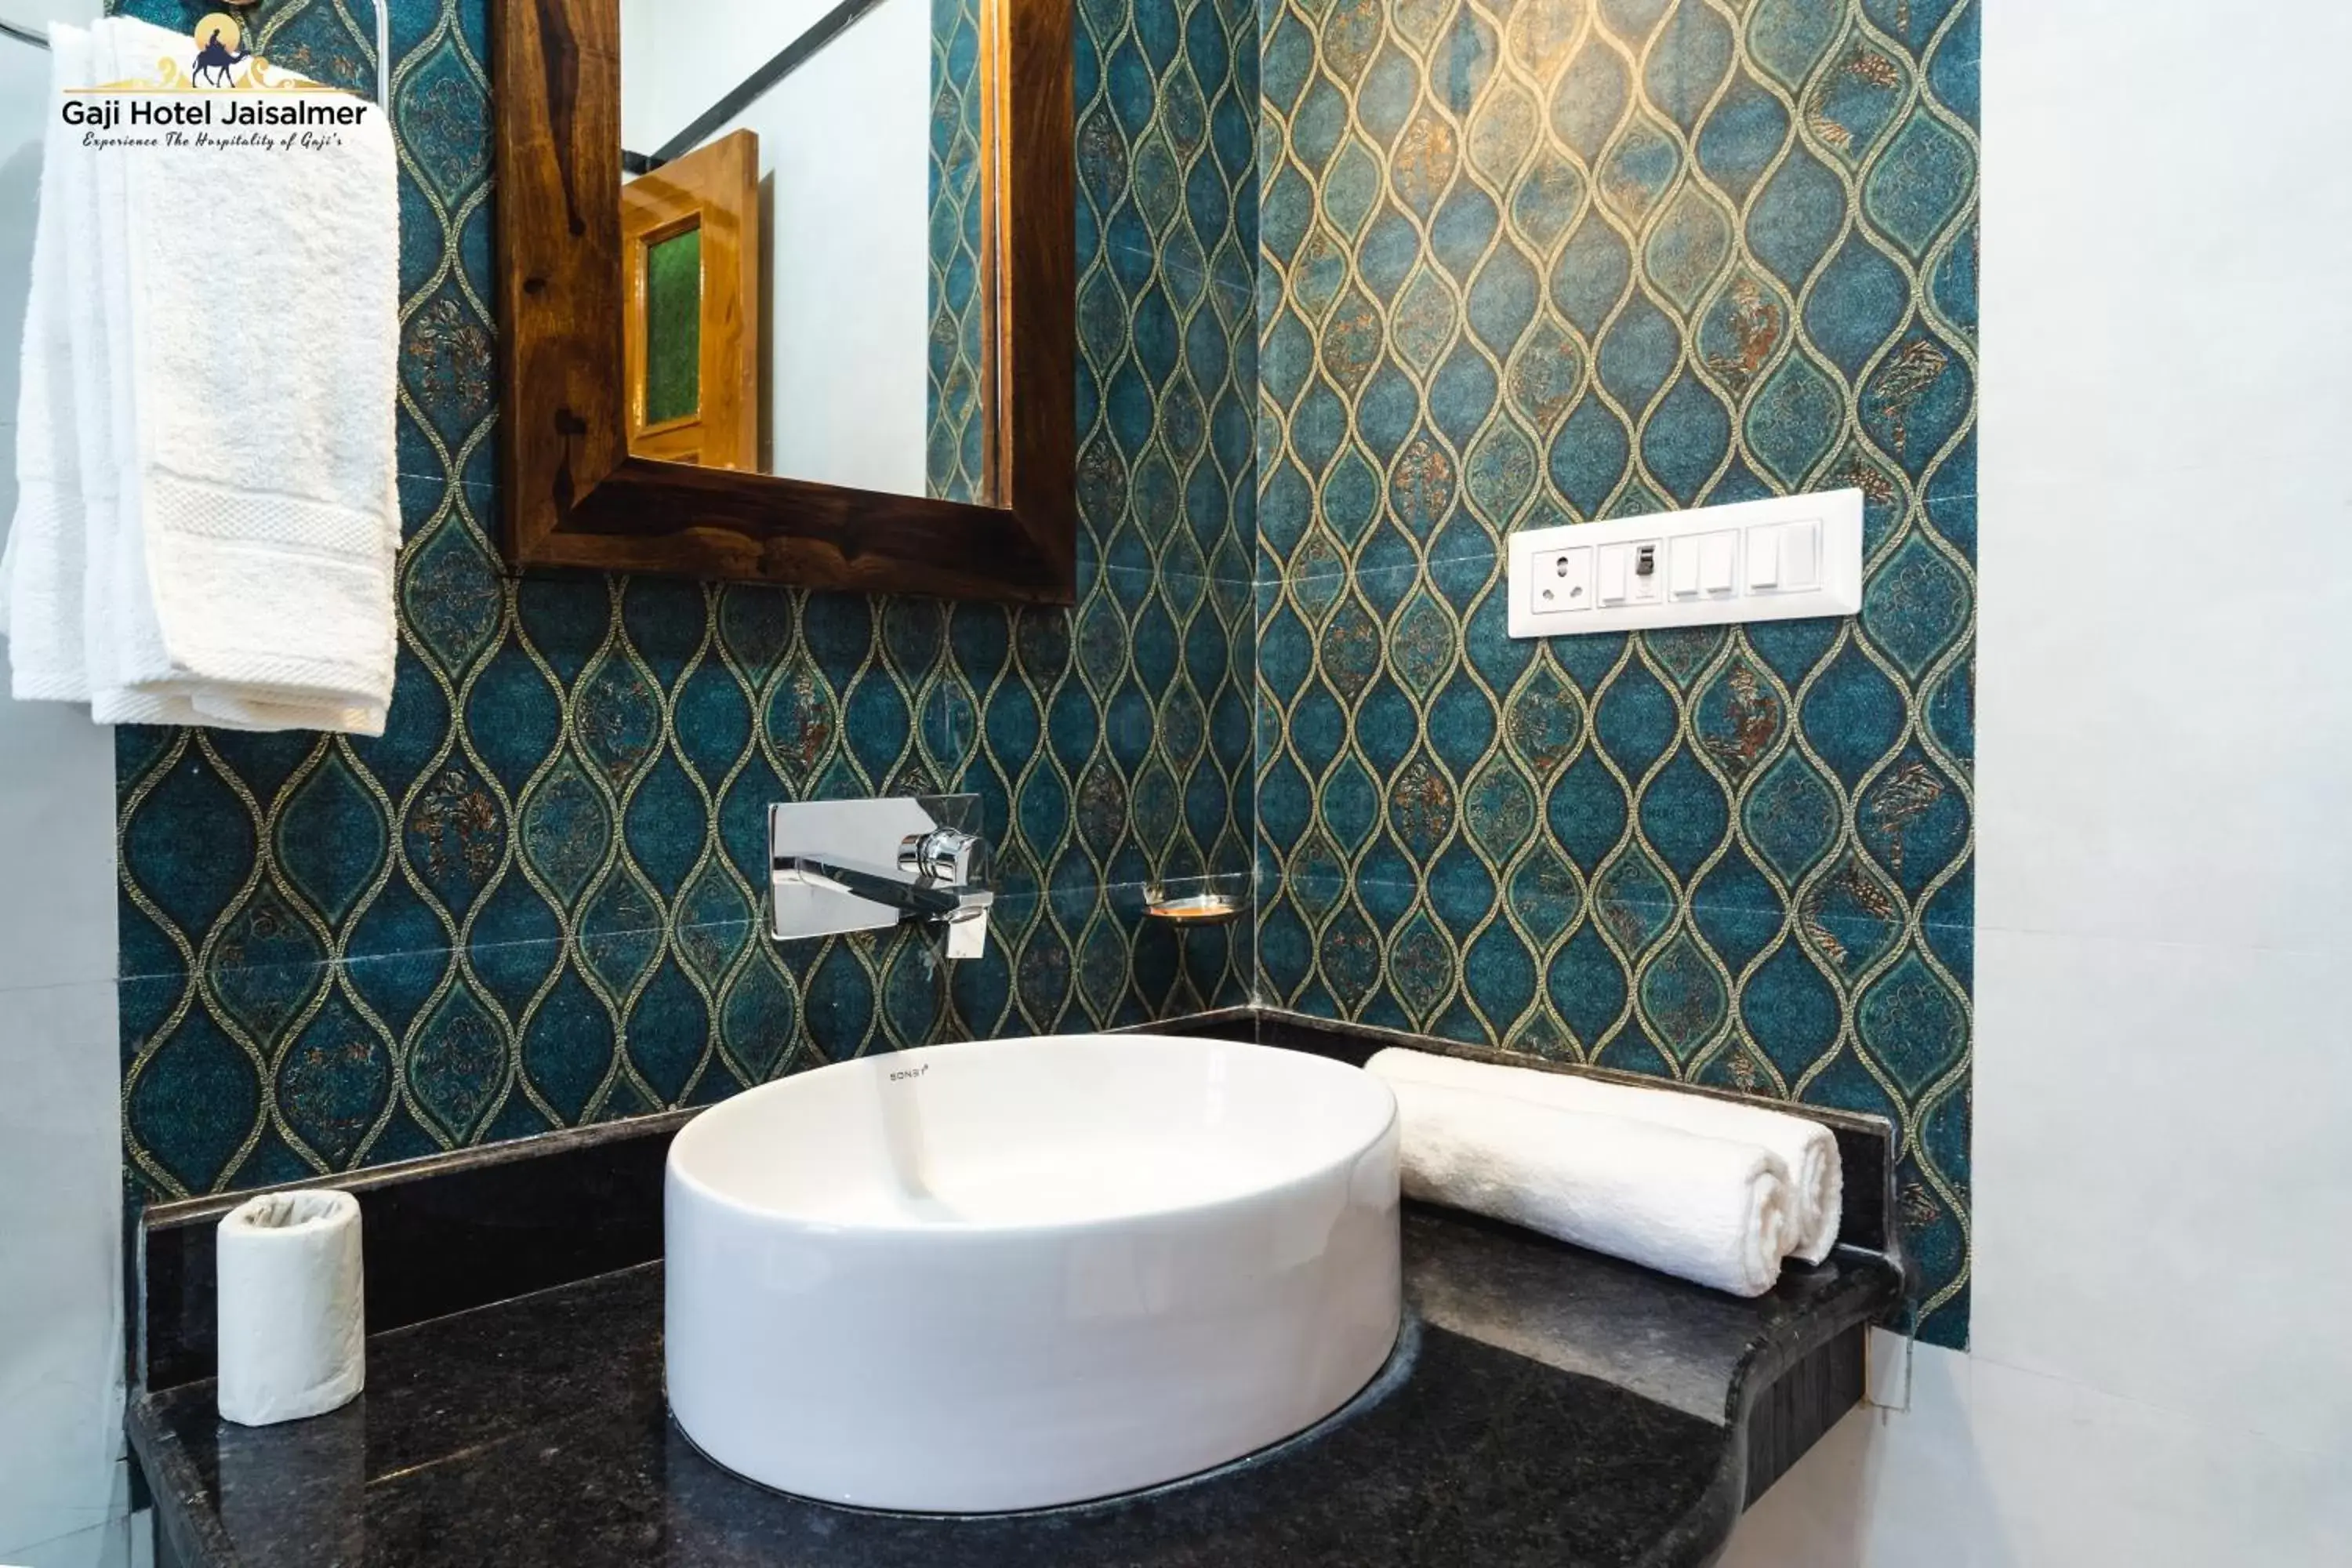 Bathroom in Gaji Hotel Jaisalmer